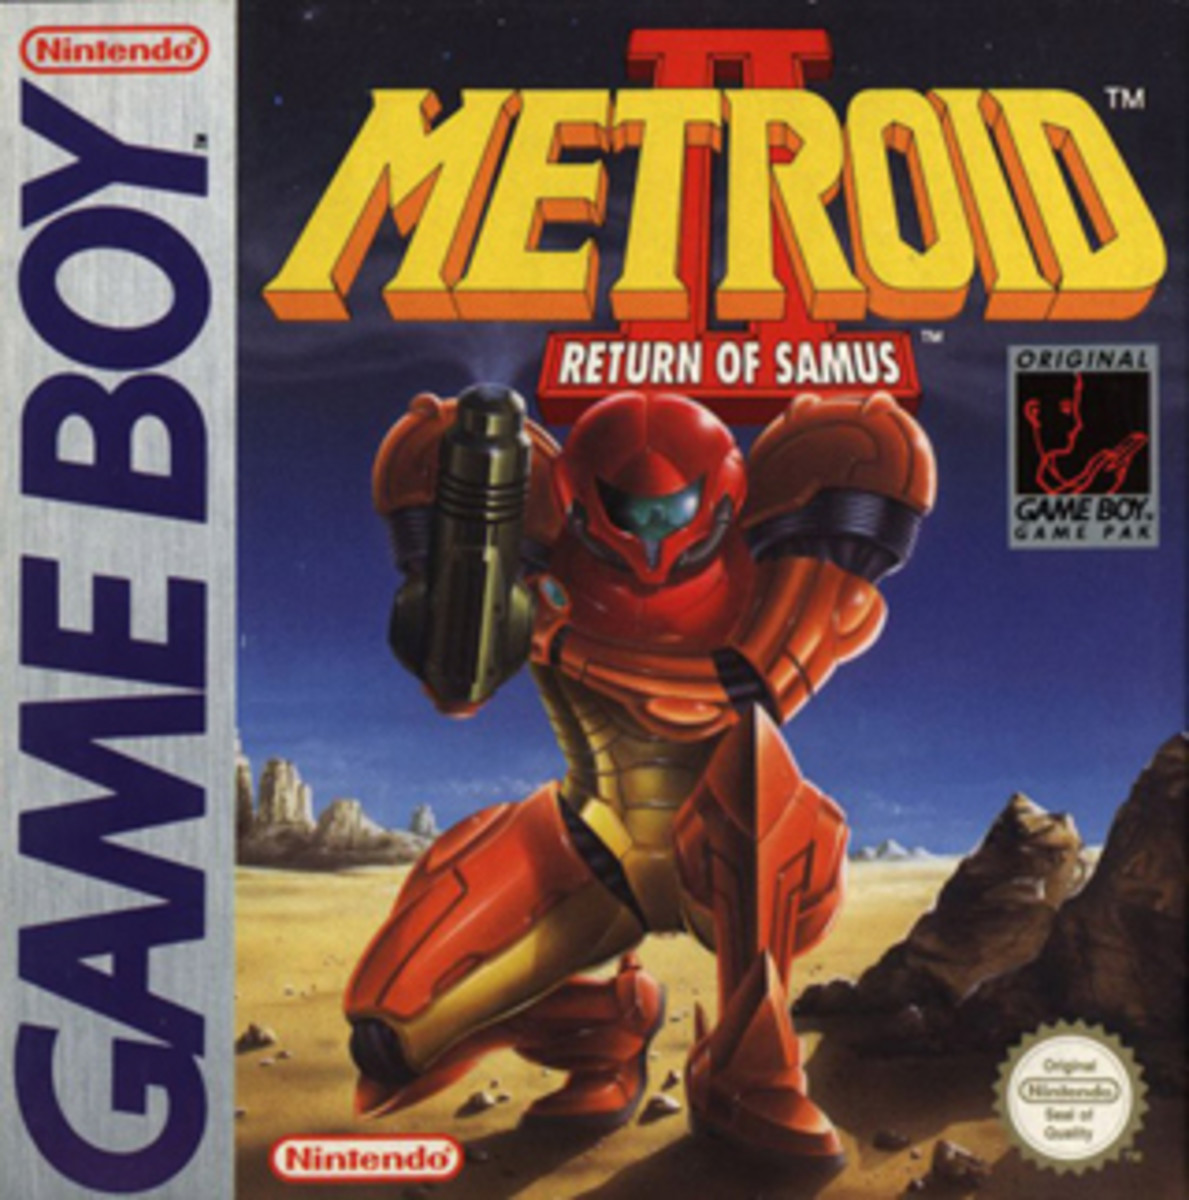 Metroid II (via Wikipedia)